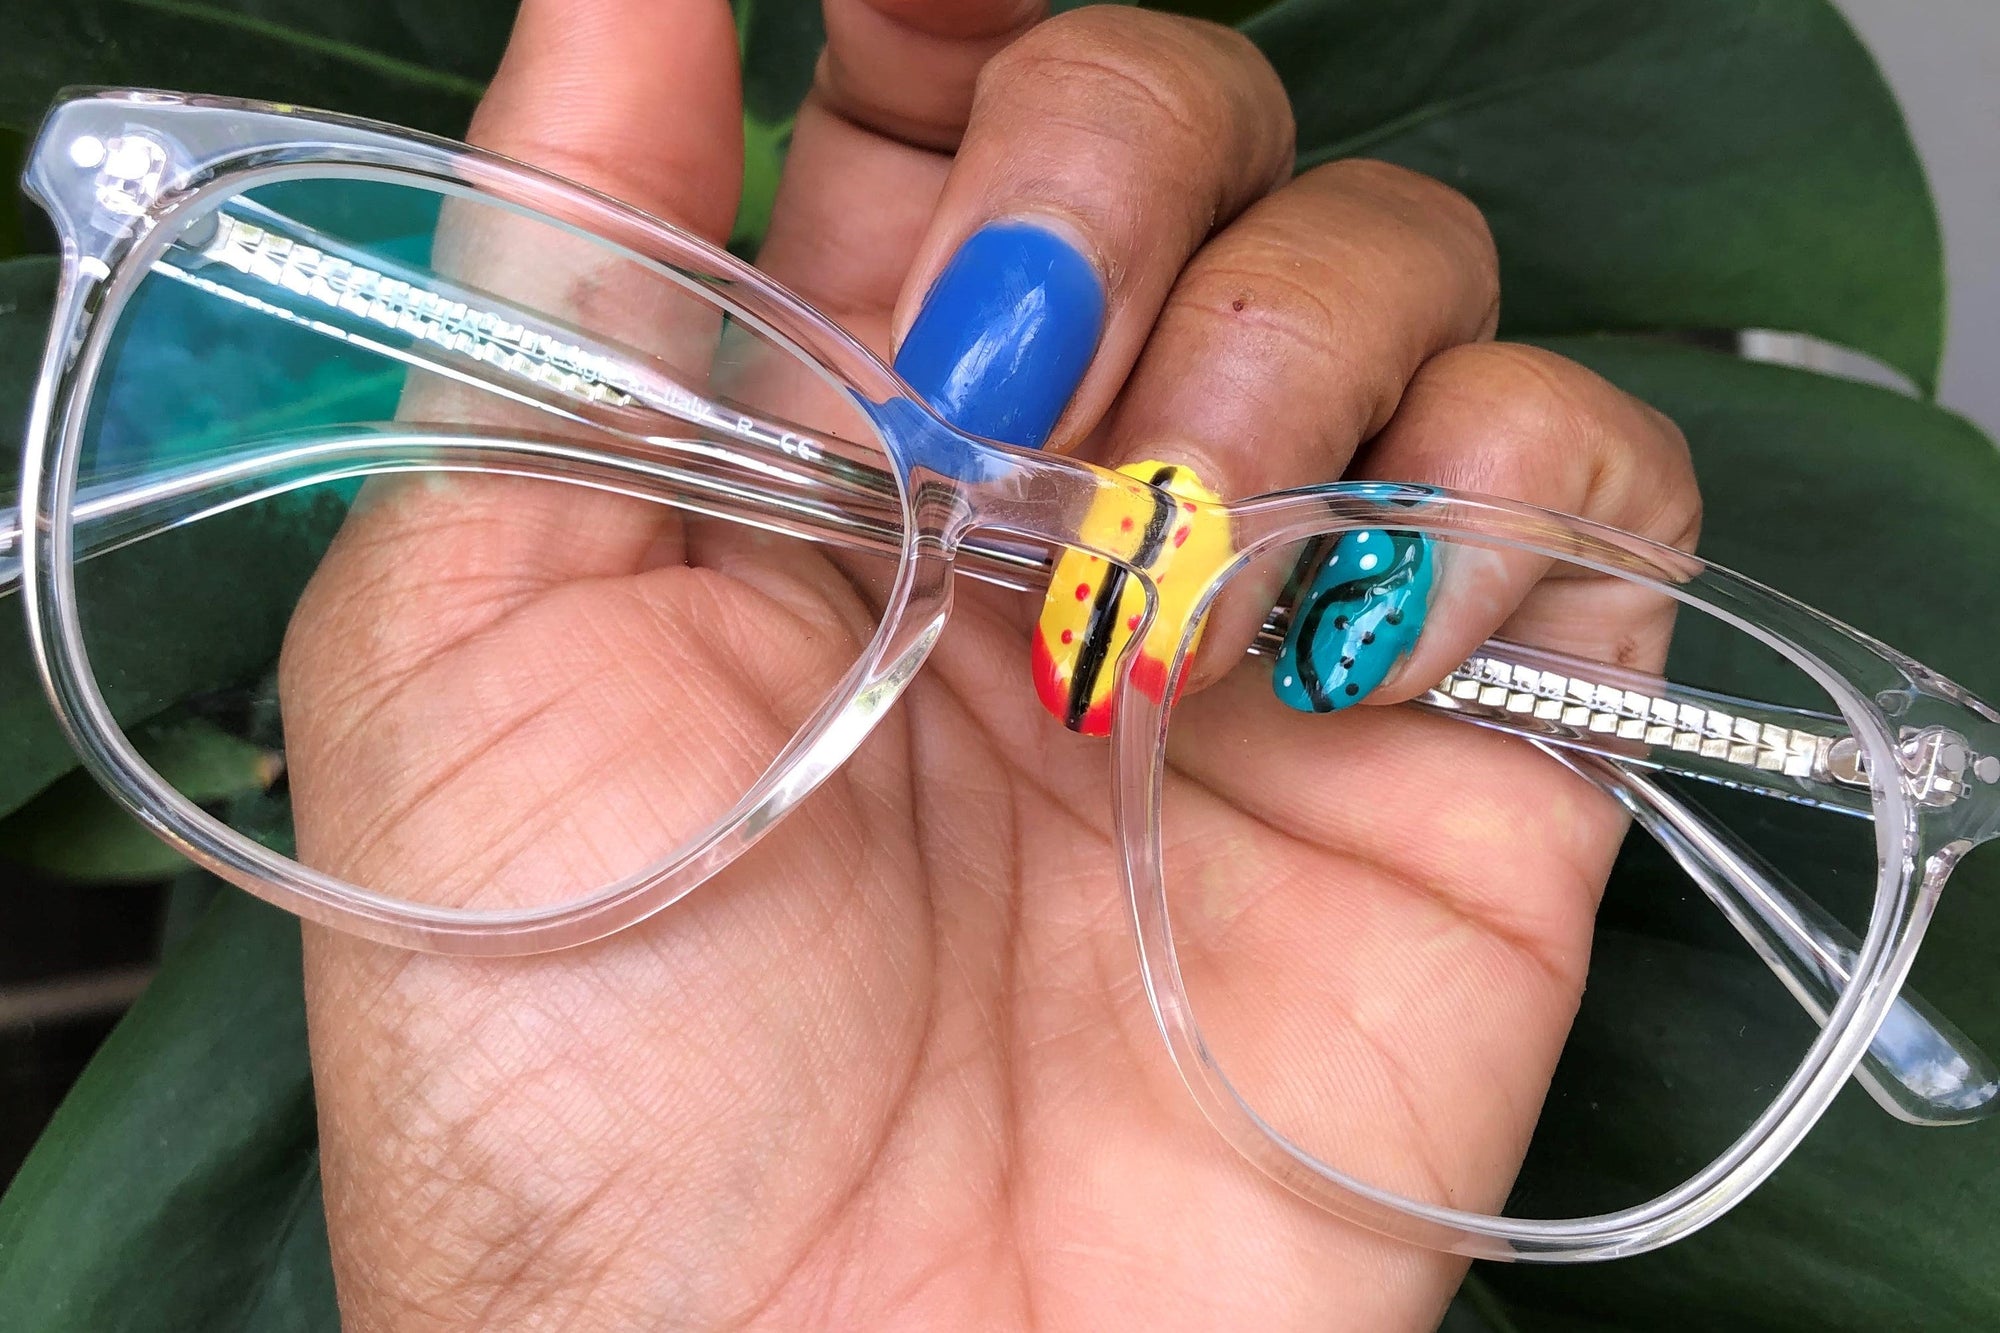 Is Anti-Radiation Glasses Harmful? | KOALAEYE OPTICAL